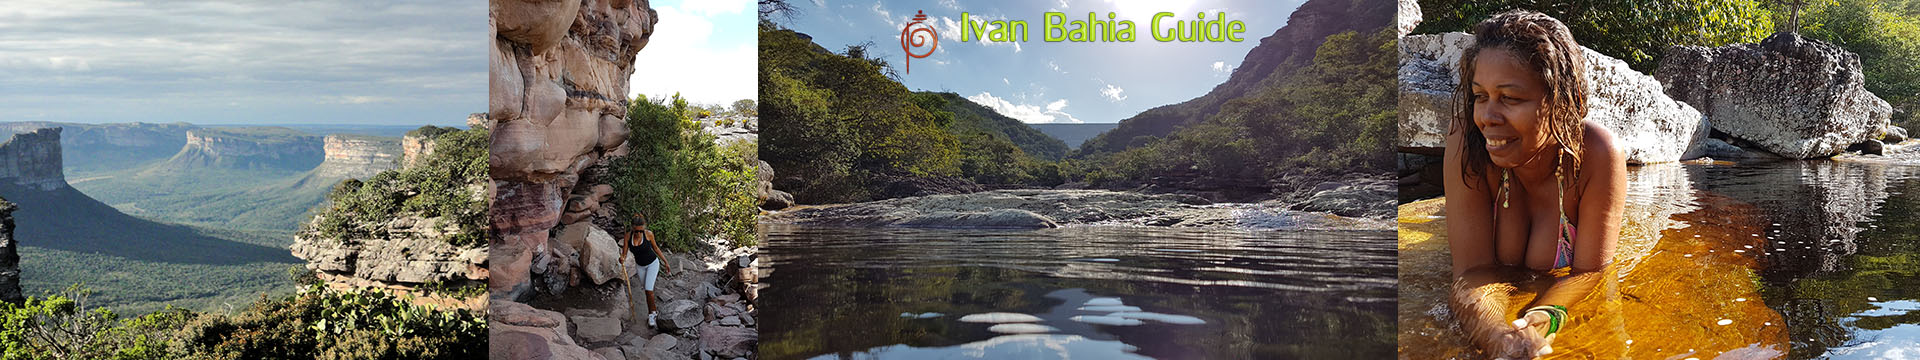 Ivan Bahia tour-guide / Best of hiking in Chapada Diamantina National Park (aka 'the Brazilian Grand Canyon') hashtag : #ChapadaDiamantinaGuide #ChapadaDiamantina #ChapadaDiamantinaTrekking #BahiaMetisse #ToursByLocals #fernandobingretourguide #IBG #FotosBahia #DiamantinaMountains #IvanBahiaReizen #IvanChapadaDiamantinaGuide #ValeDoPati #PatiValey #ValeDoCapao #Trajano #Zentur #chapadatrekking #TrilhasDiamantina #morodopaiinacio #lencois #poçoazul #ecoturismo